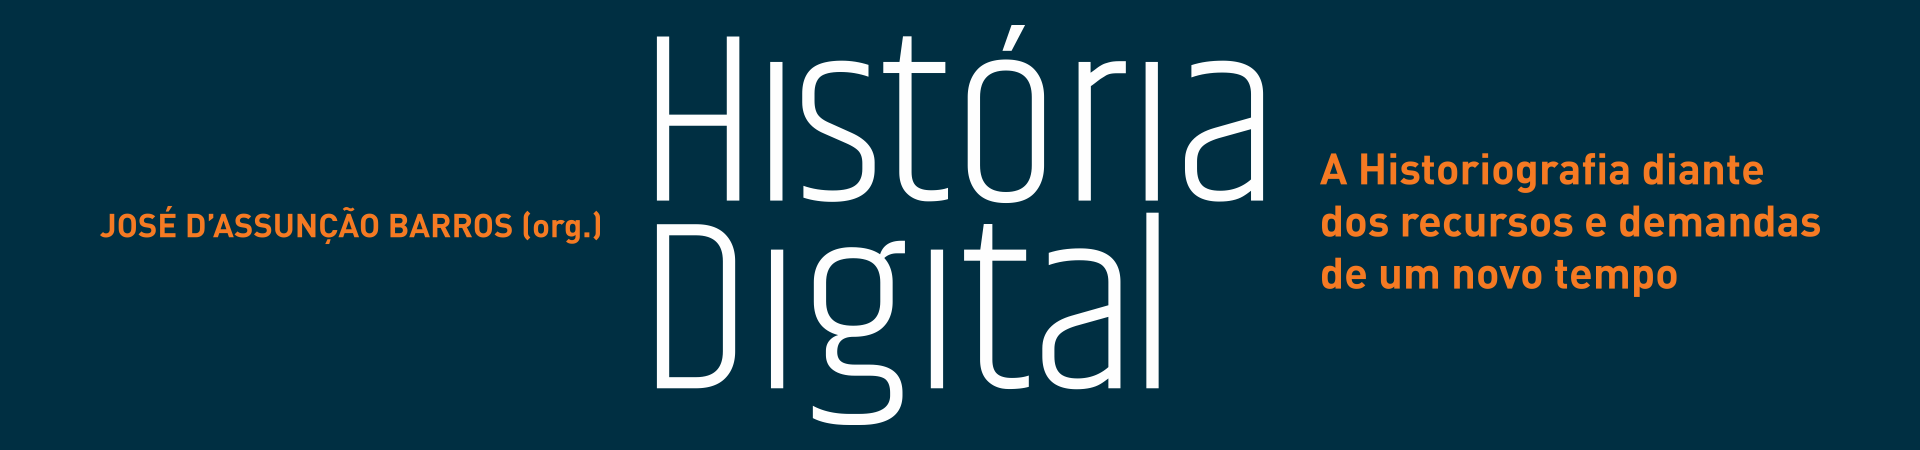 História digital